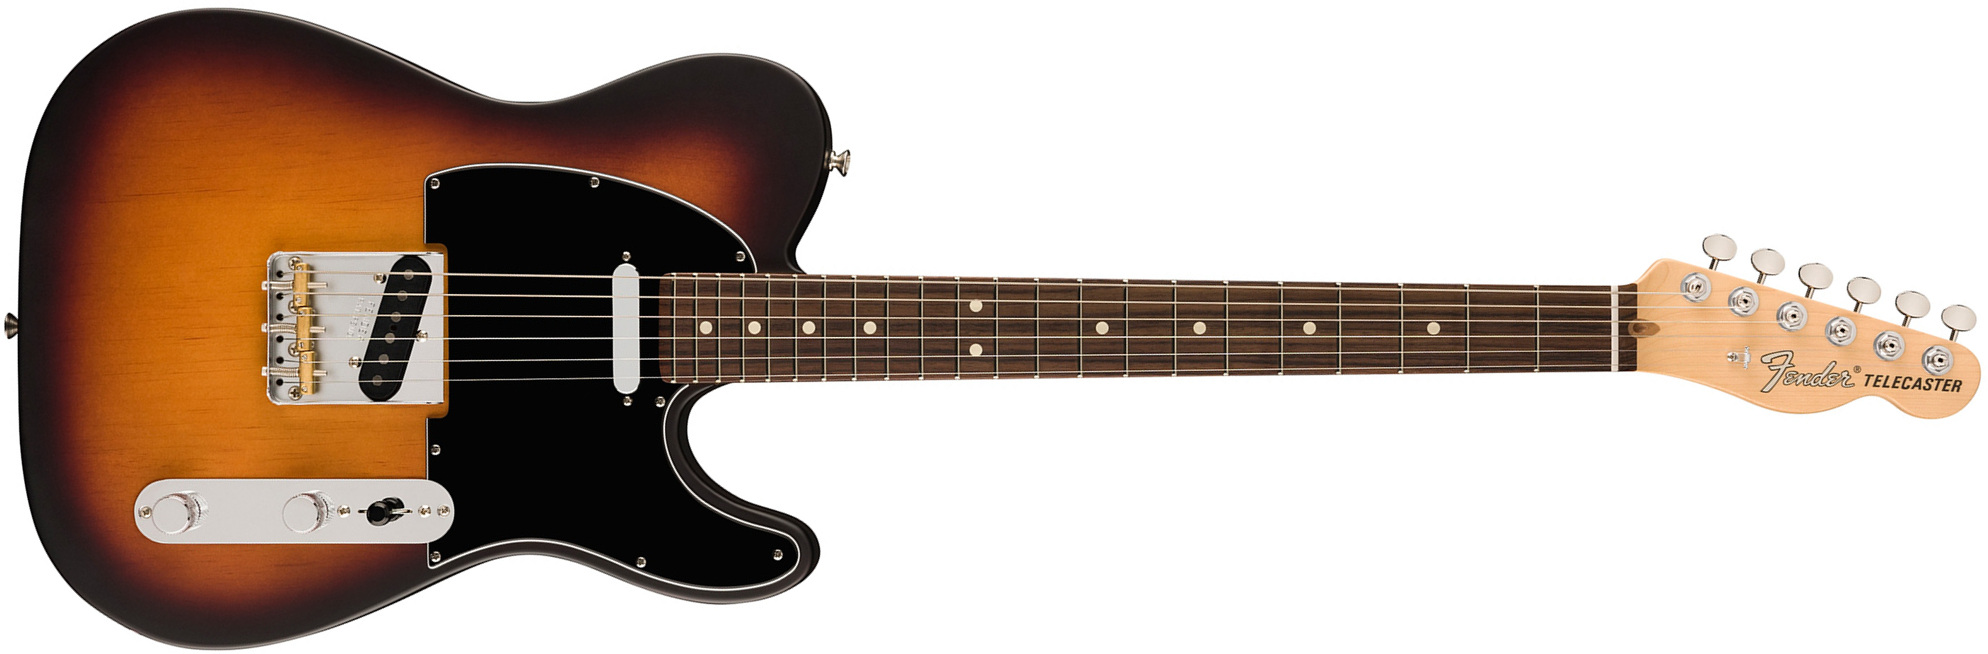 Fender Tele Timber American Performer Fsr Usa 2s Ht Rw - Satin 2-color Sunburst - Televorm elektrische gitaar - Main picture